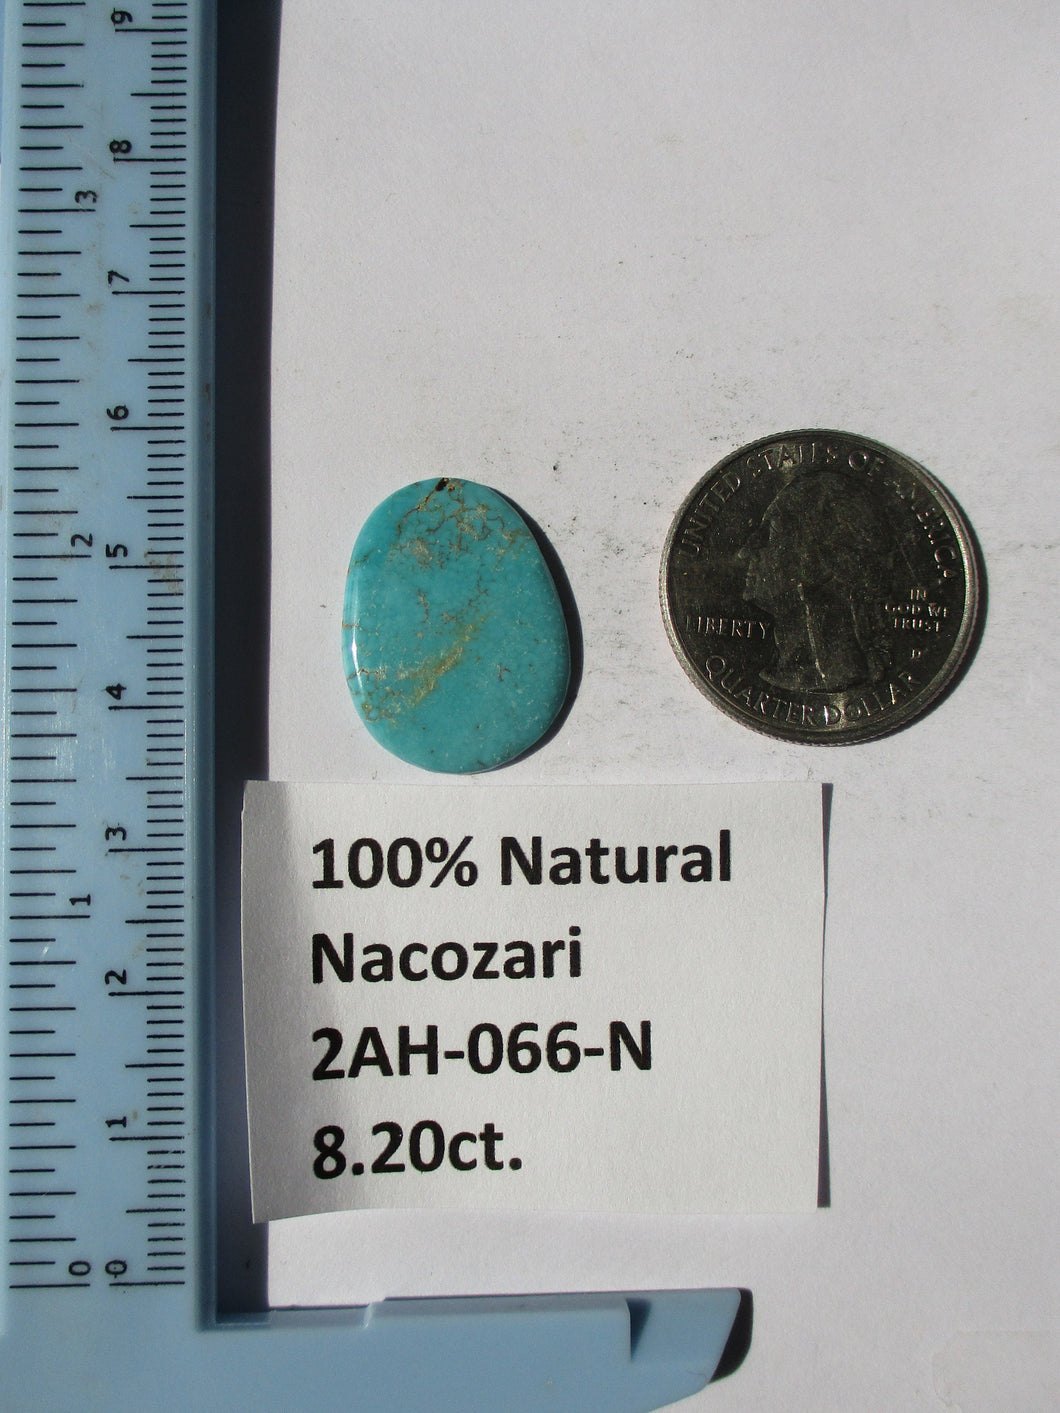 8.2 ct. (22x17x3 mm) 100% Natural Nacozari (Naco) Turquoise Cabochon Gemstone, # 2AH 066 s